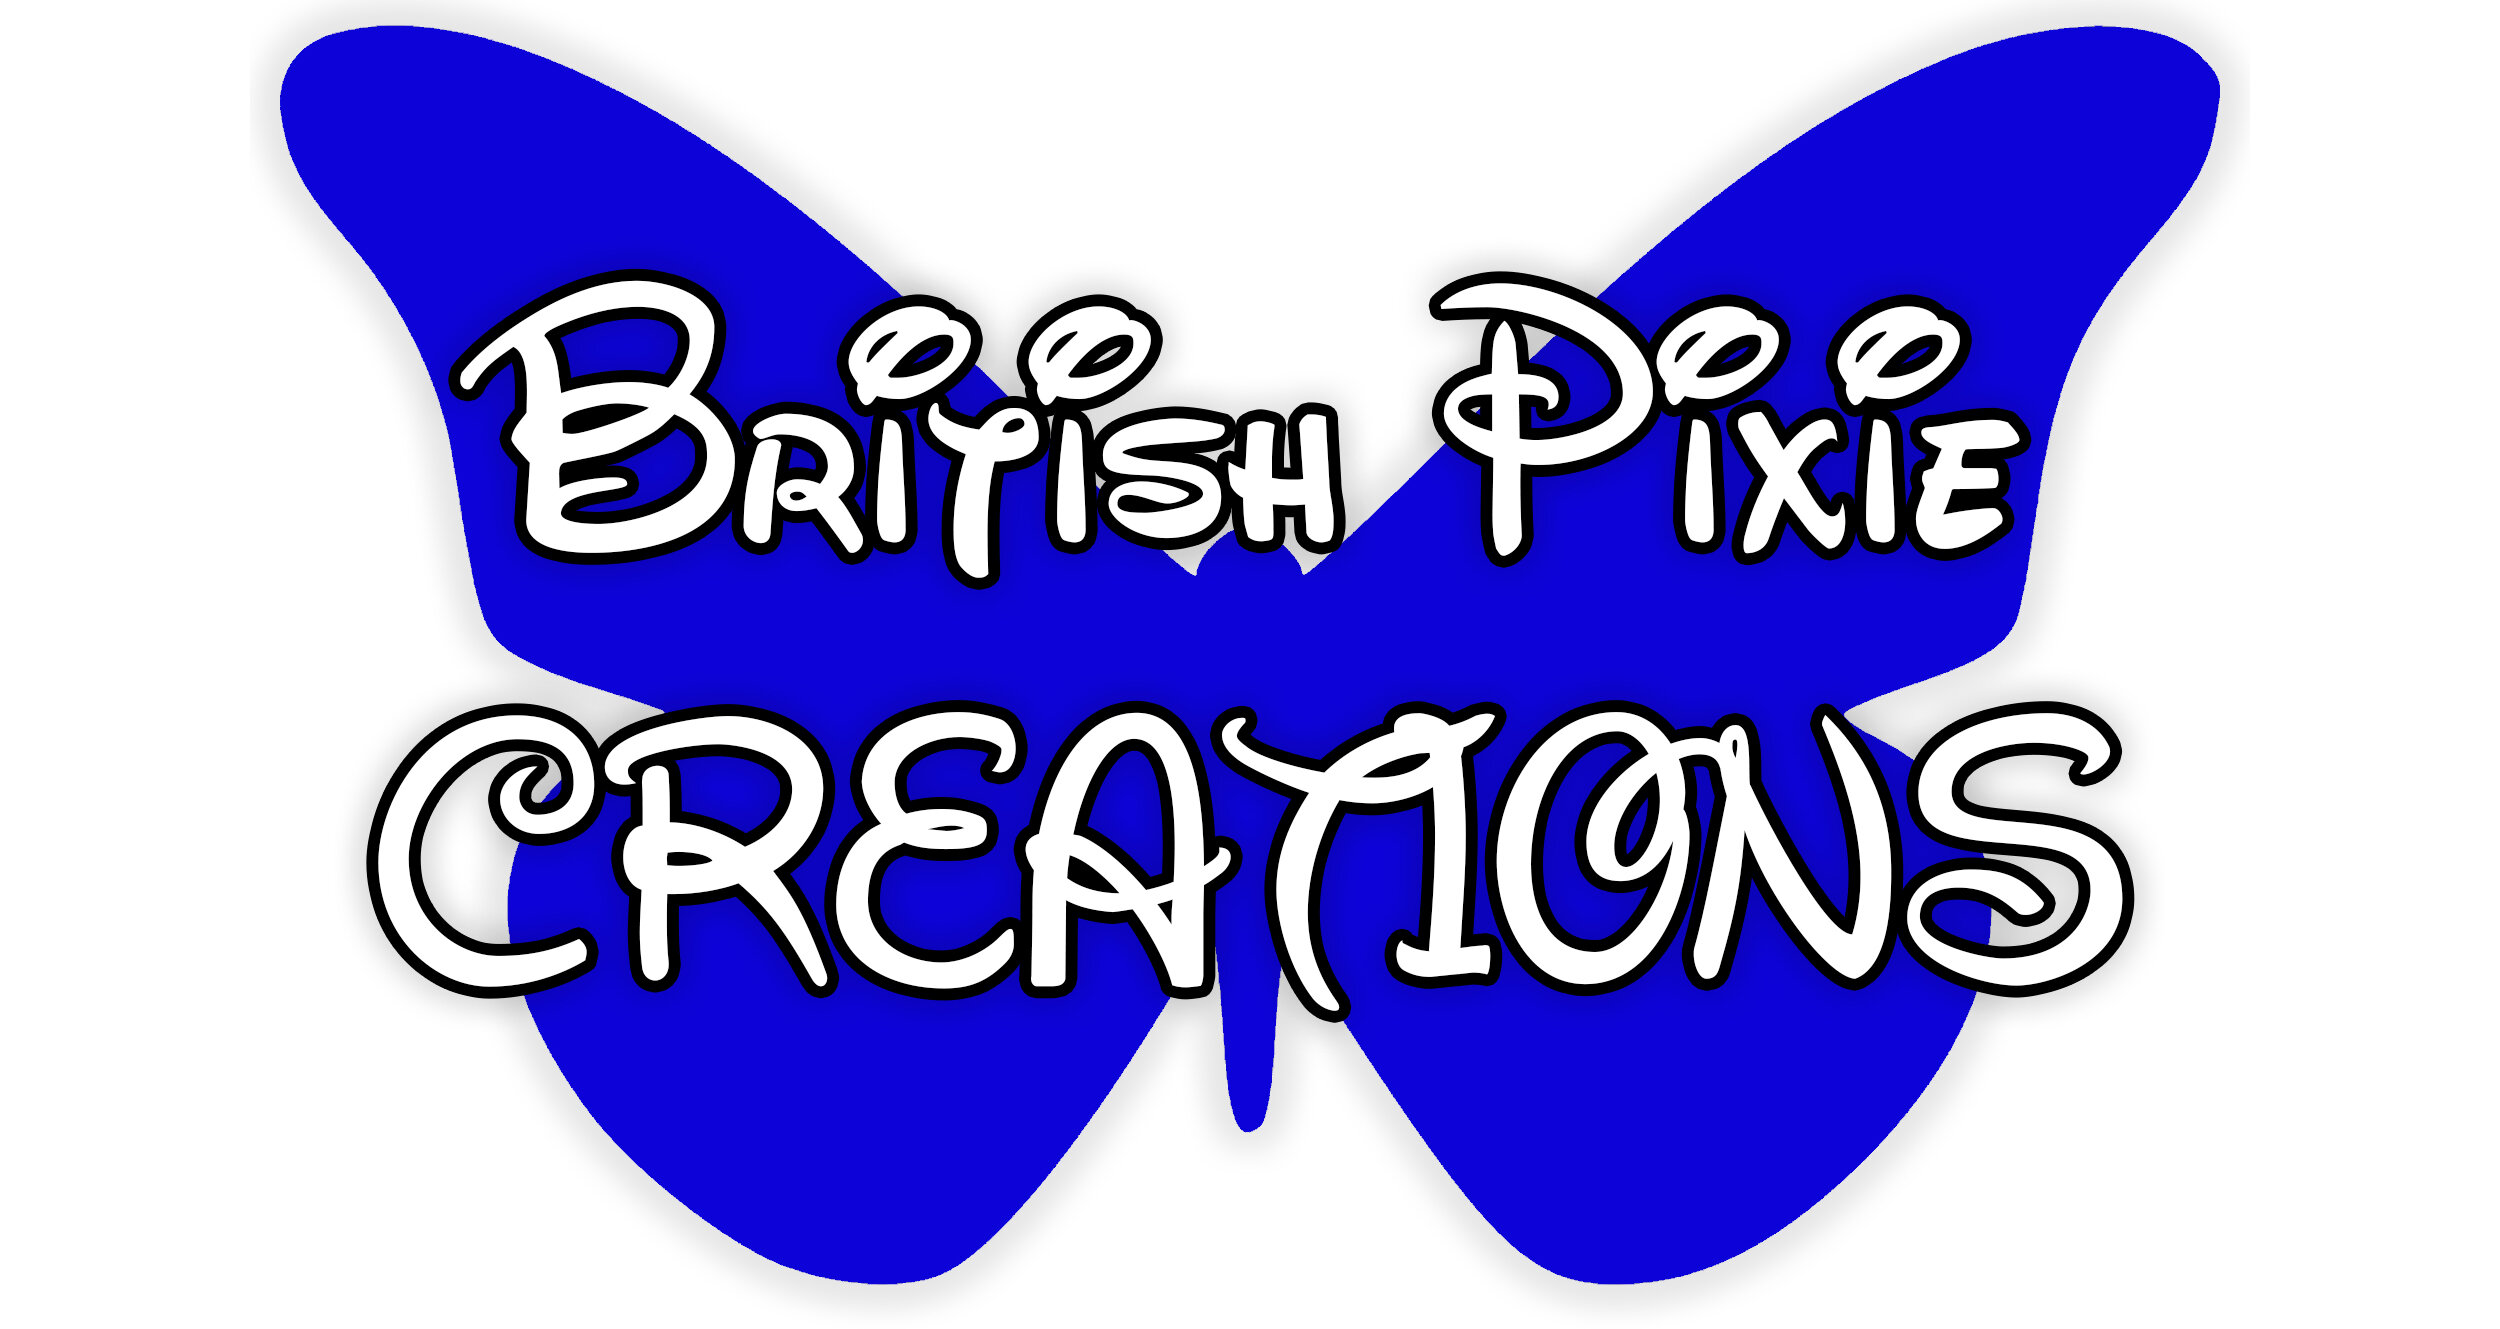 British Pixie Creations LOGO.jpg